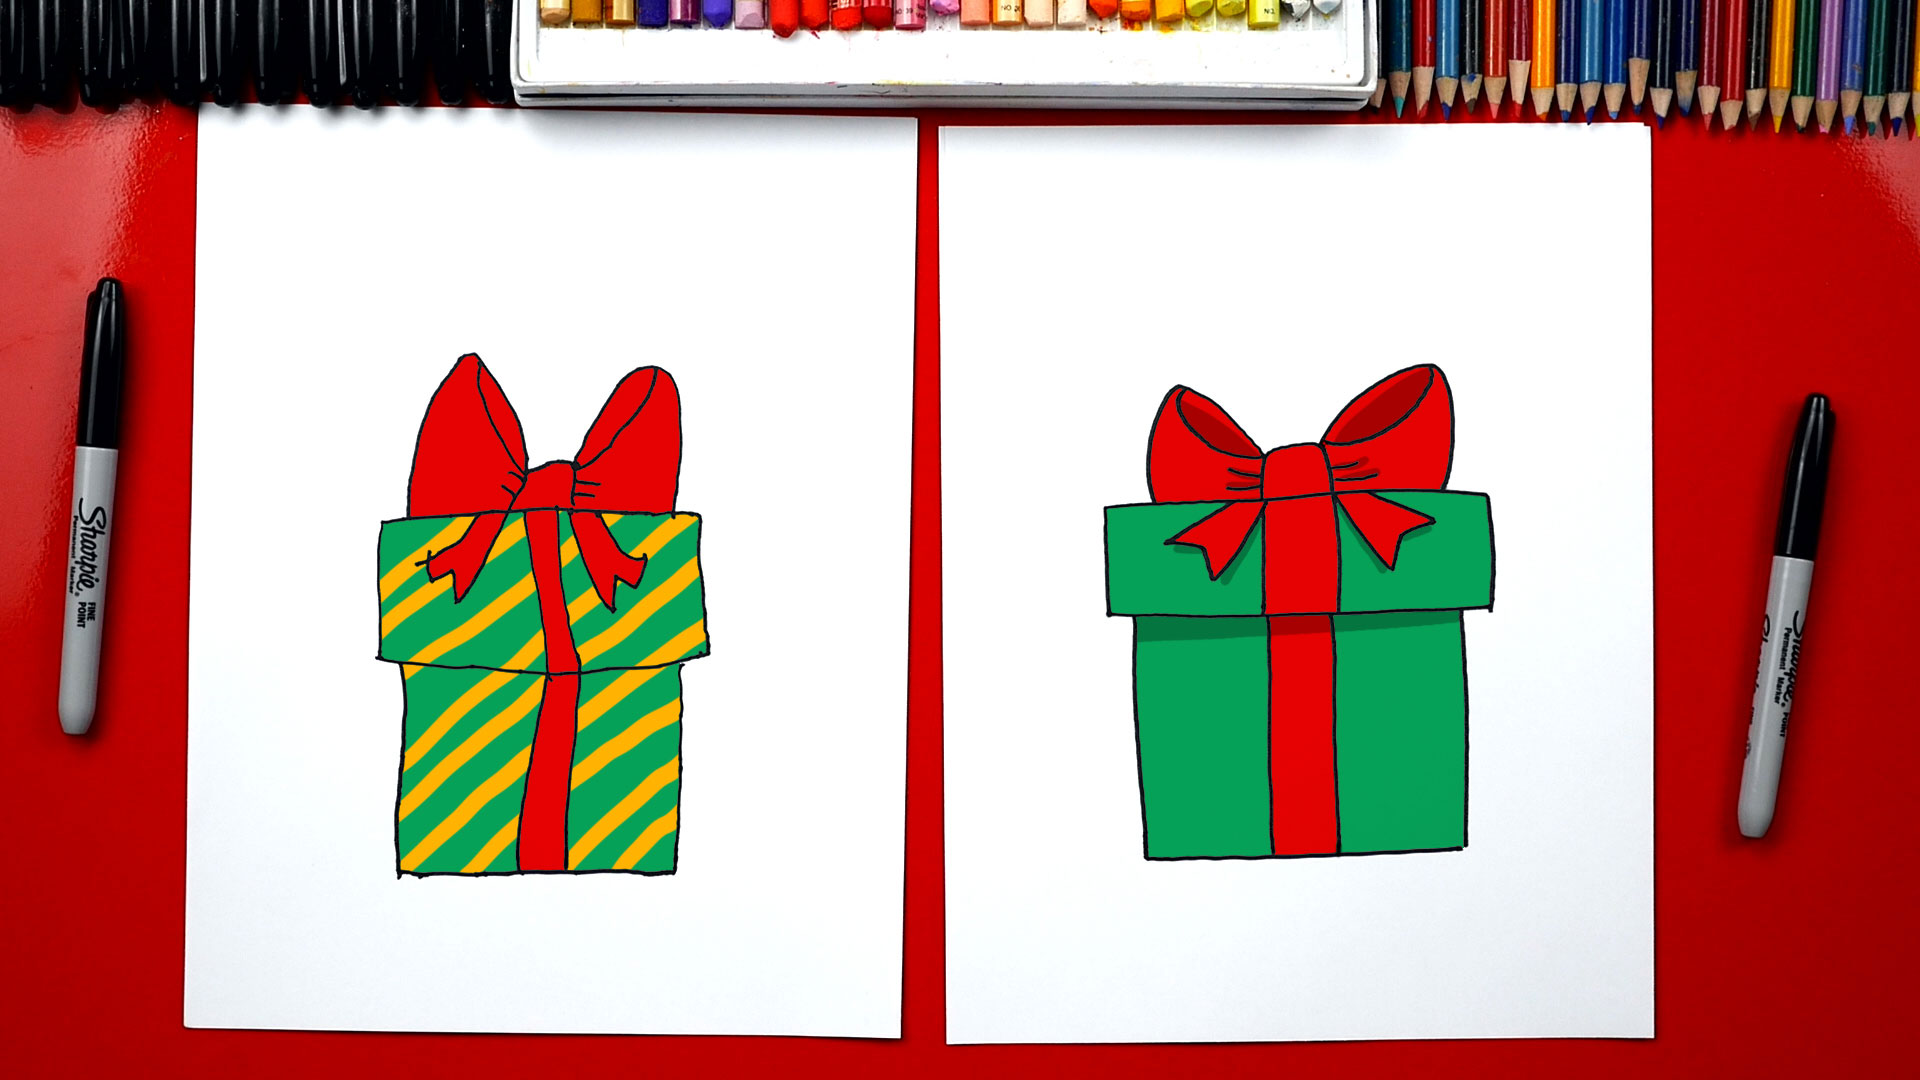 https://artforkidshub.com/wp-content/uploads/2013/12/how-to-draw-a-present-feature.jpg